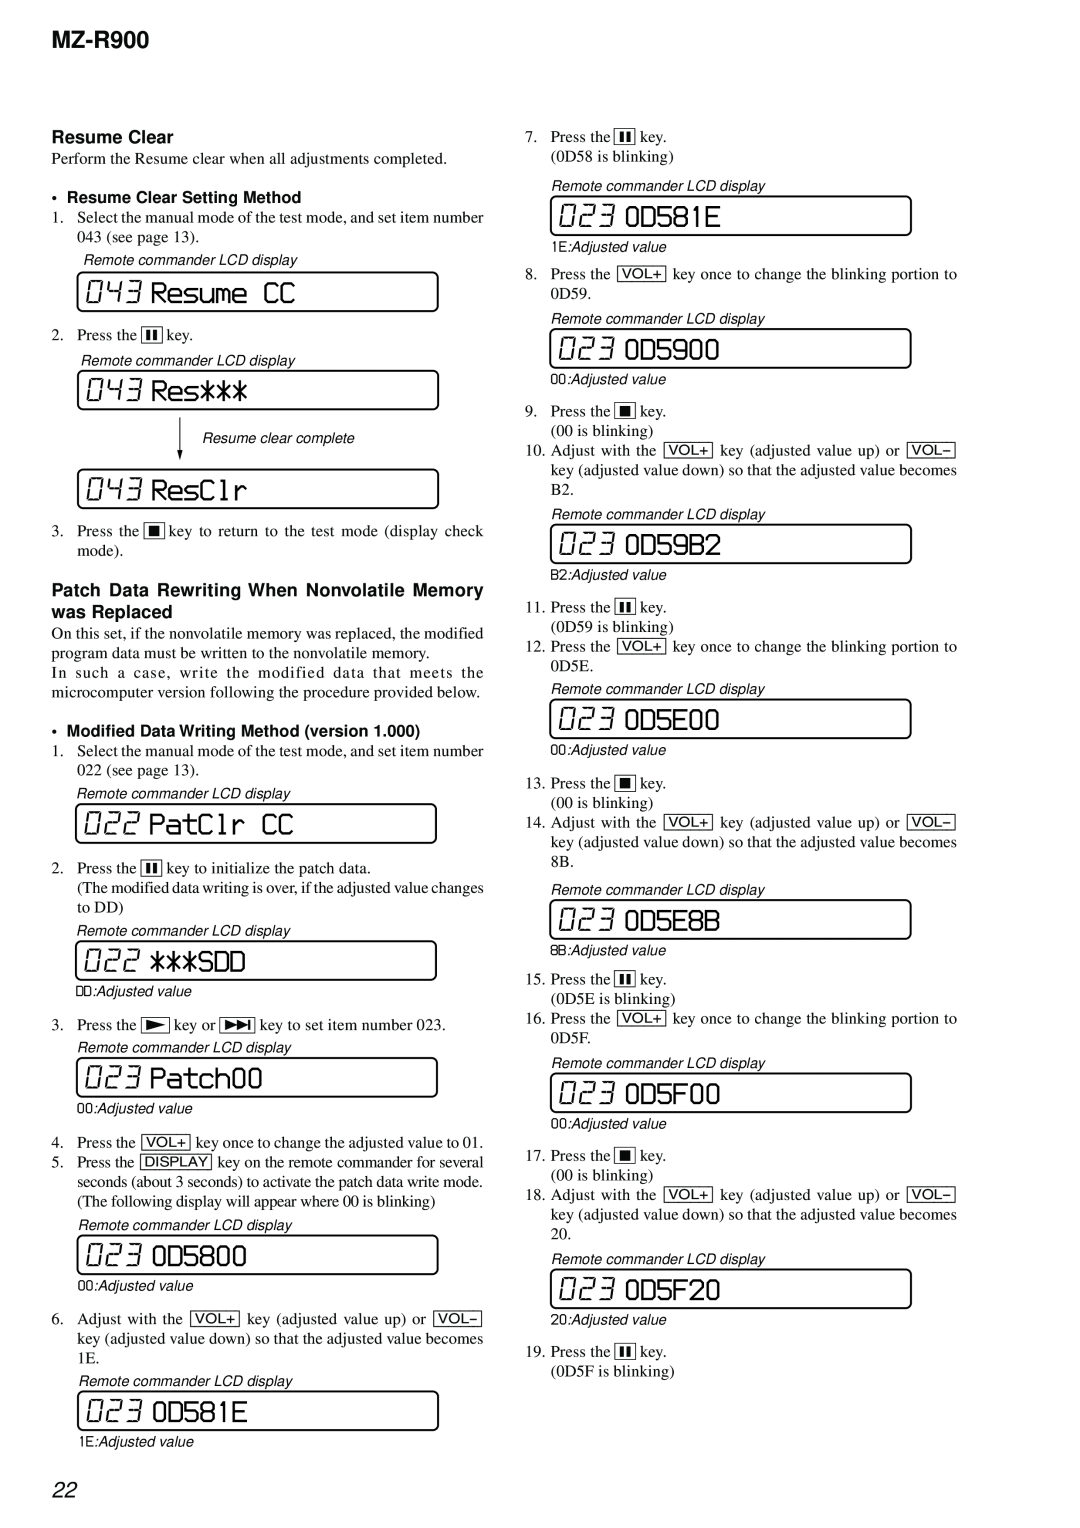 Sony MZ-R900 service manual Resume CC 